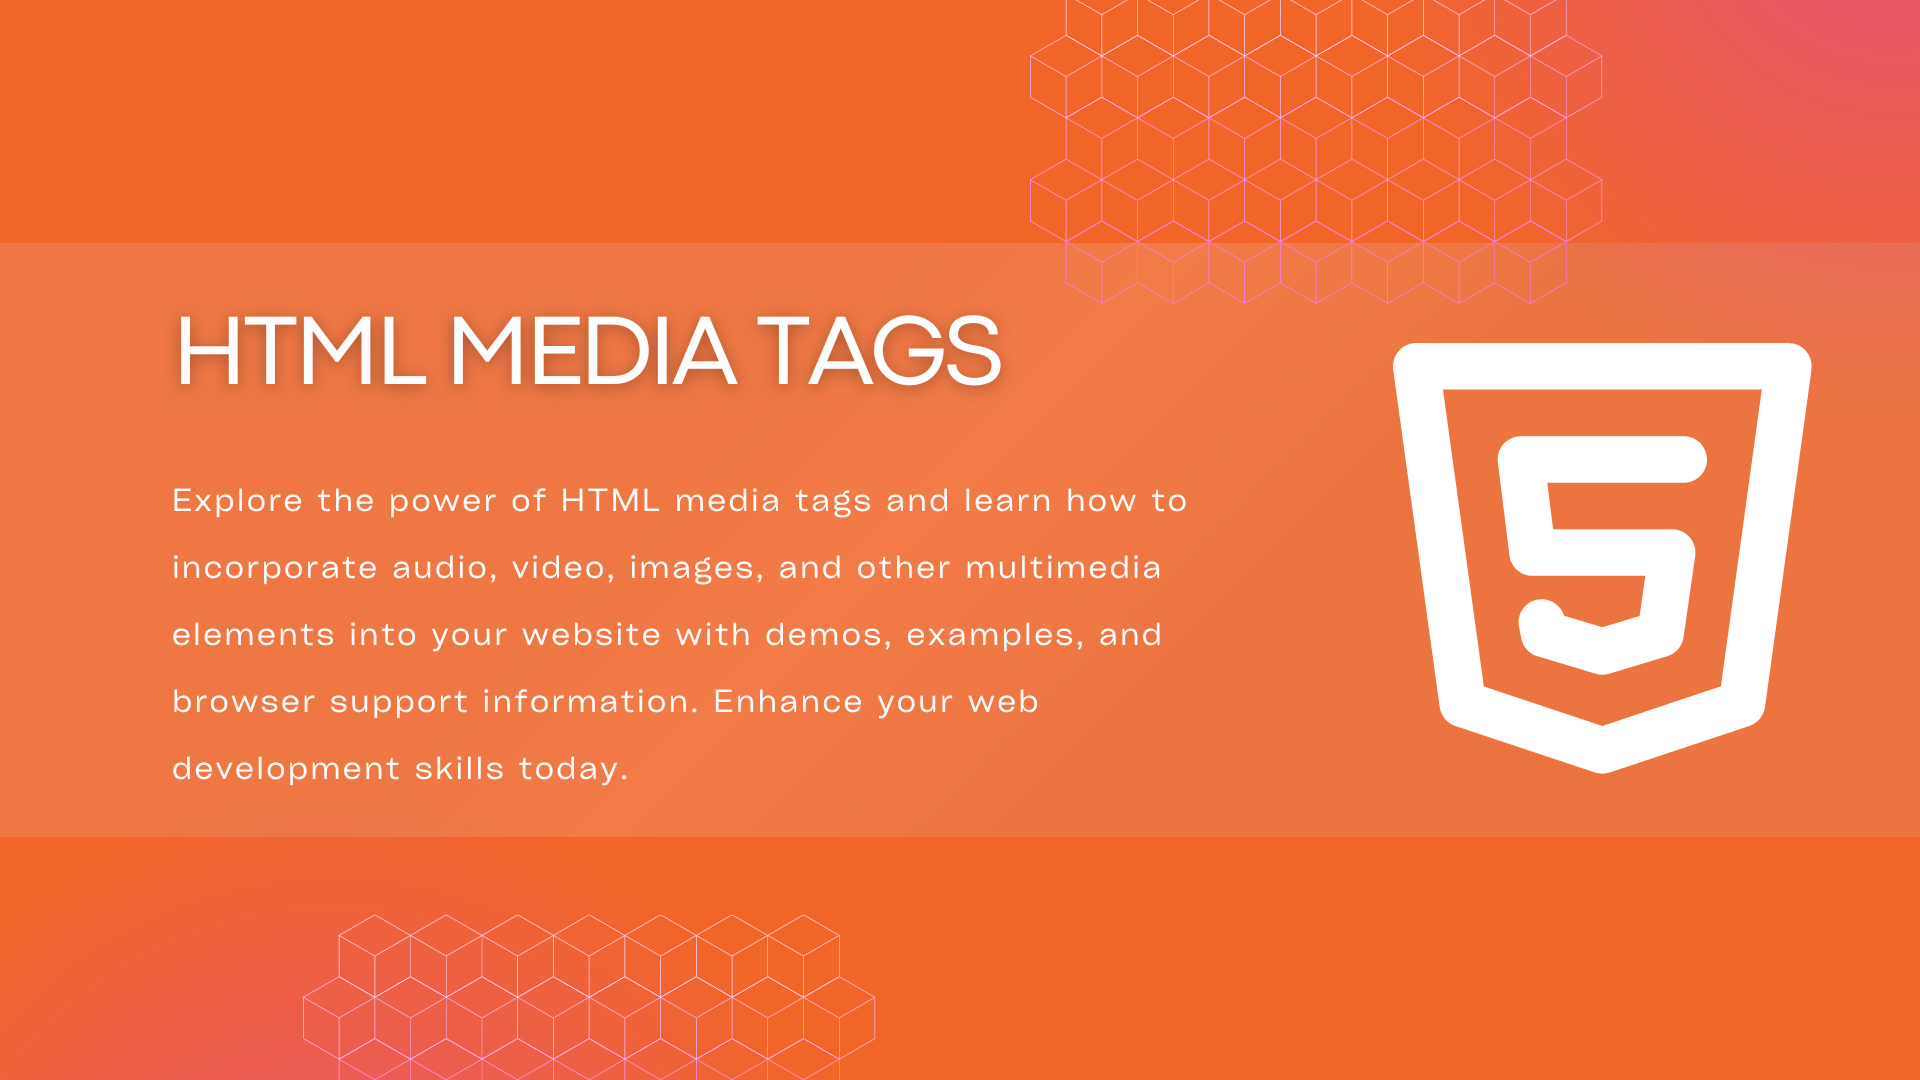 HTML media tags